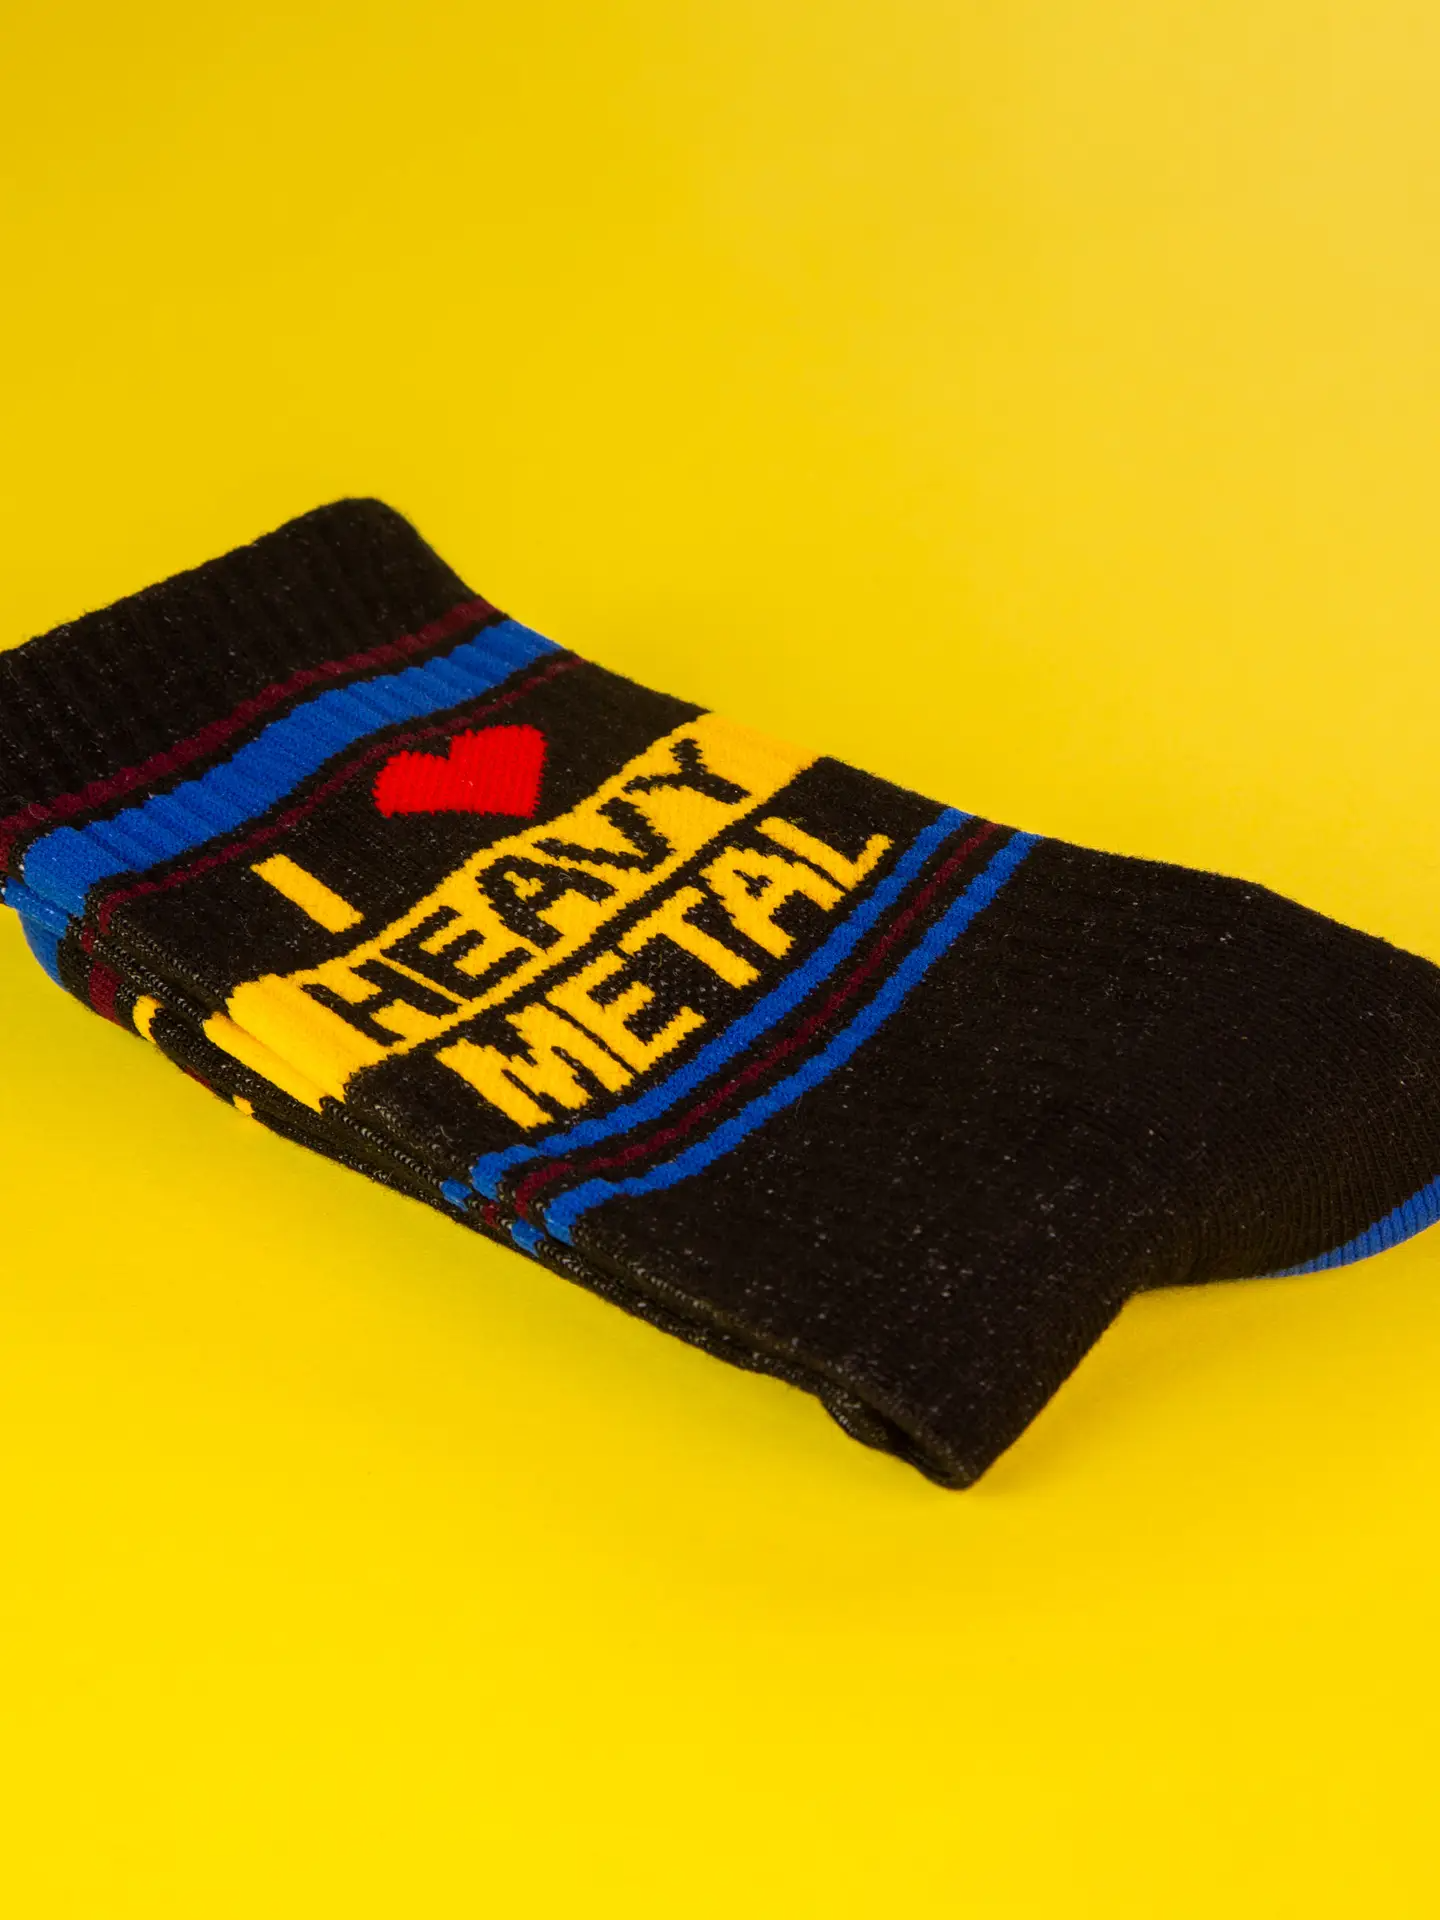 I Love Heavy Metal Music - Unisex Socks